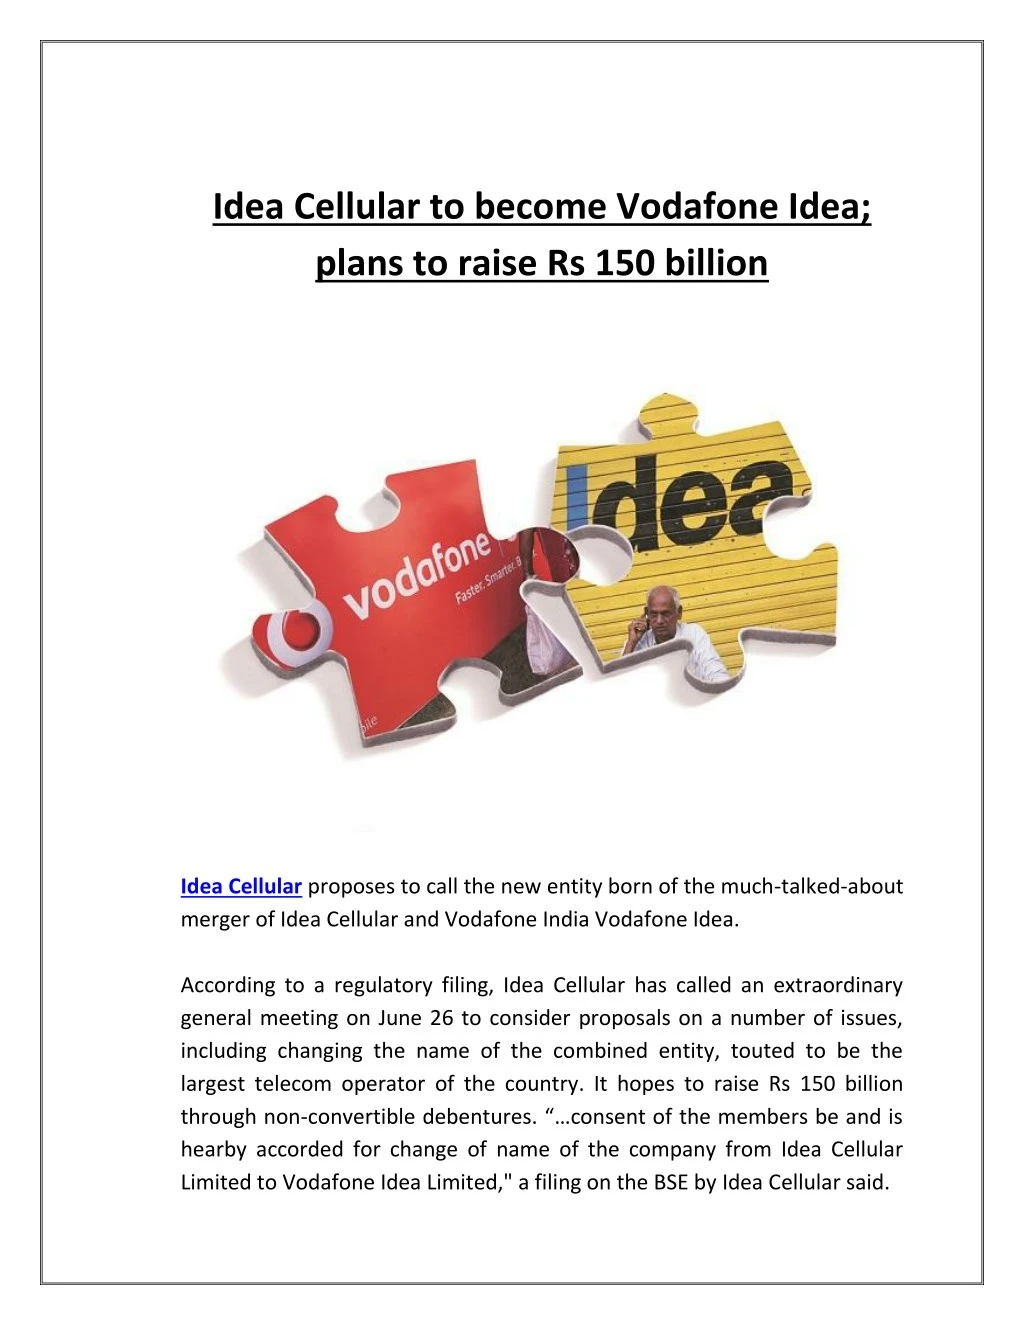 idea cellular to become vodafone idea plans